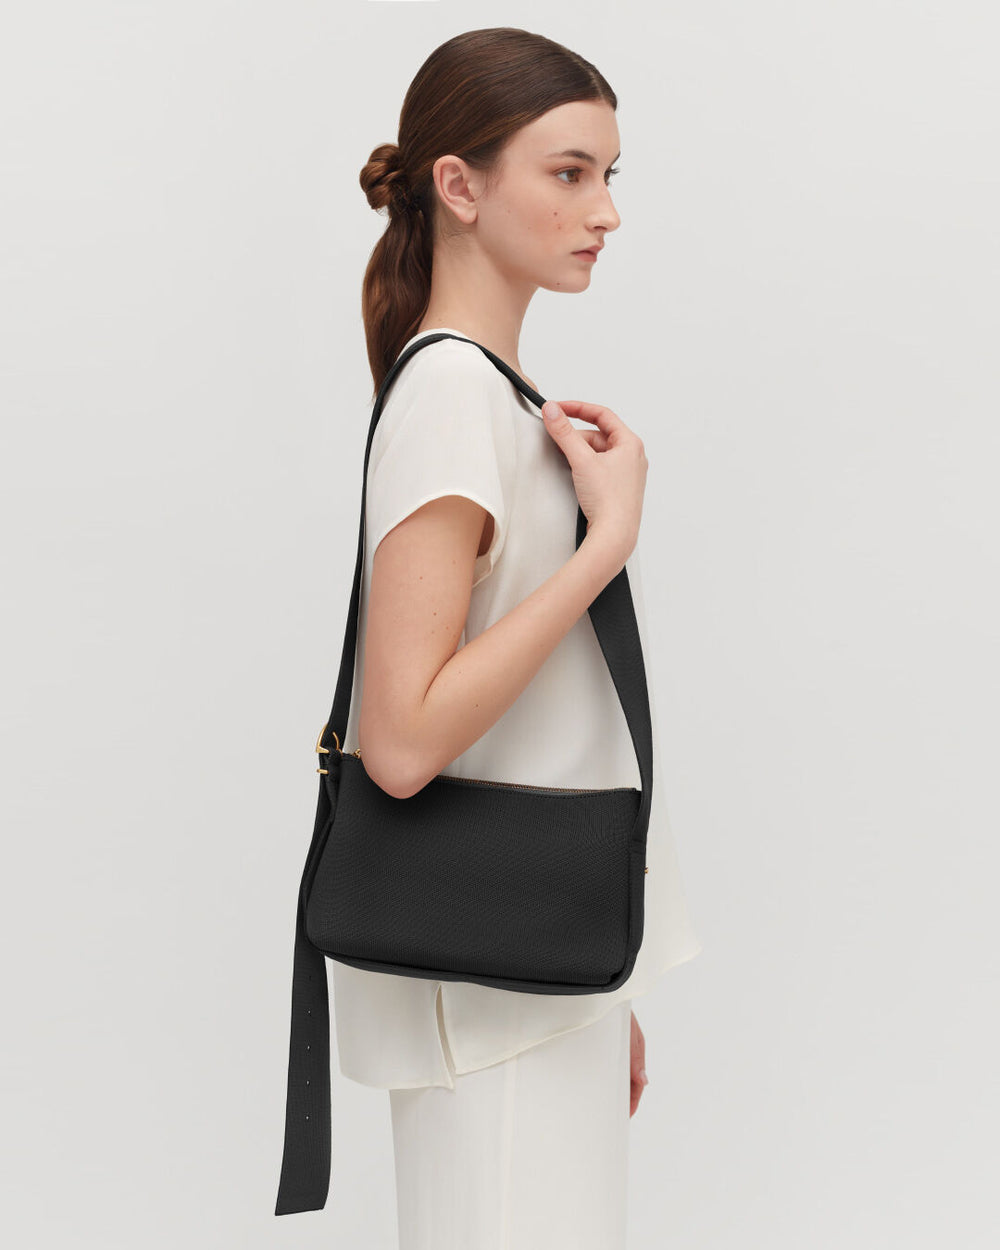 Woman standing sideways with a handbag over her shoulder.